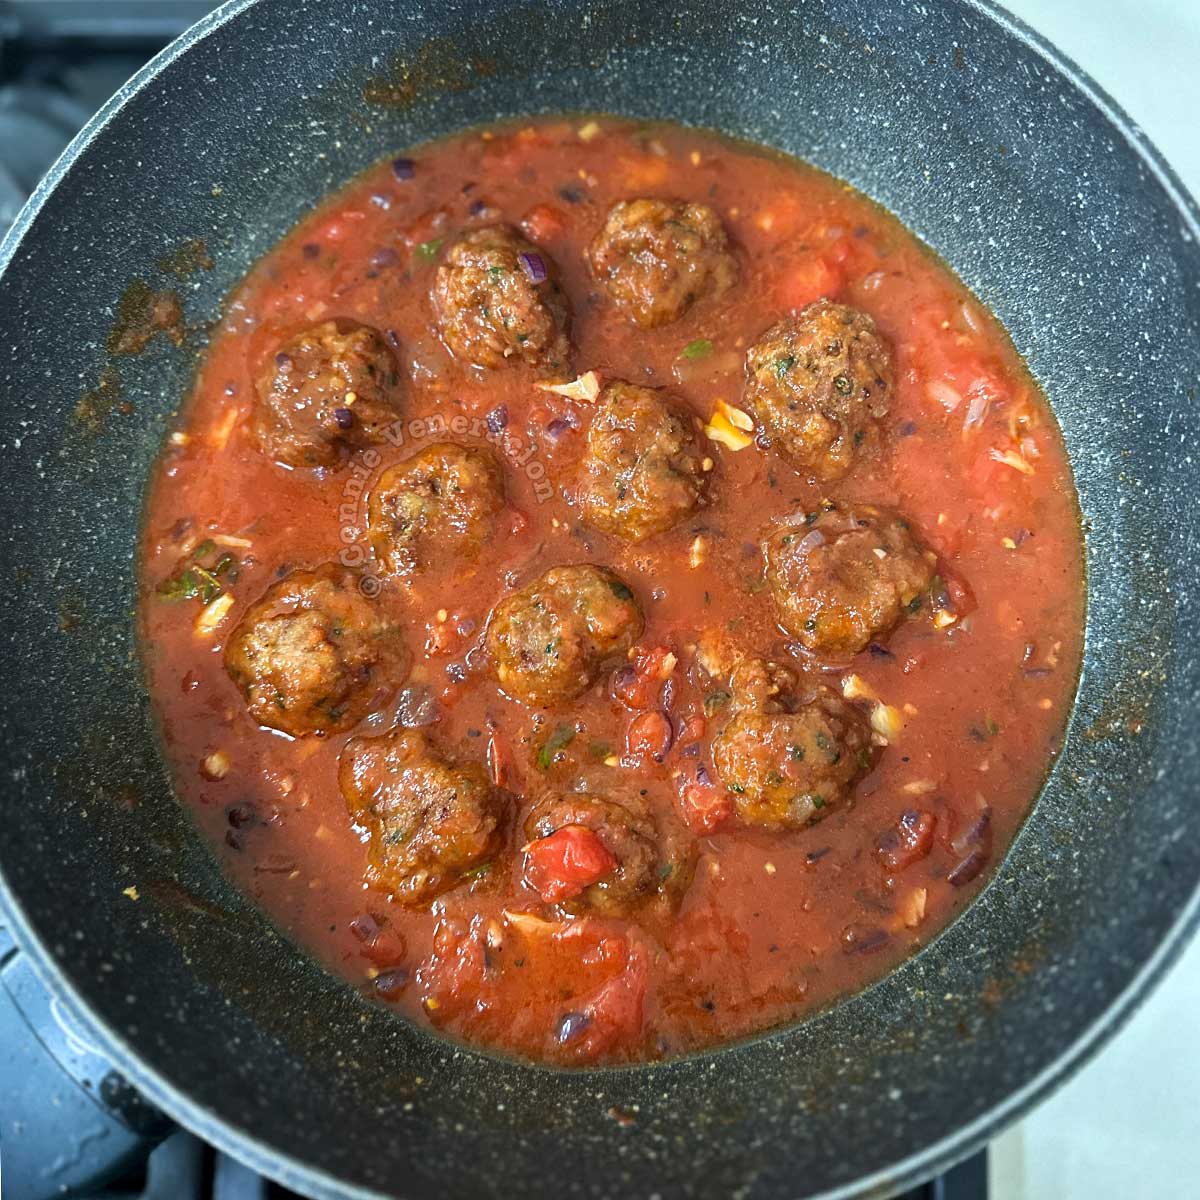 Meatballs simmering in tomato sauce